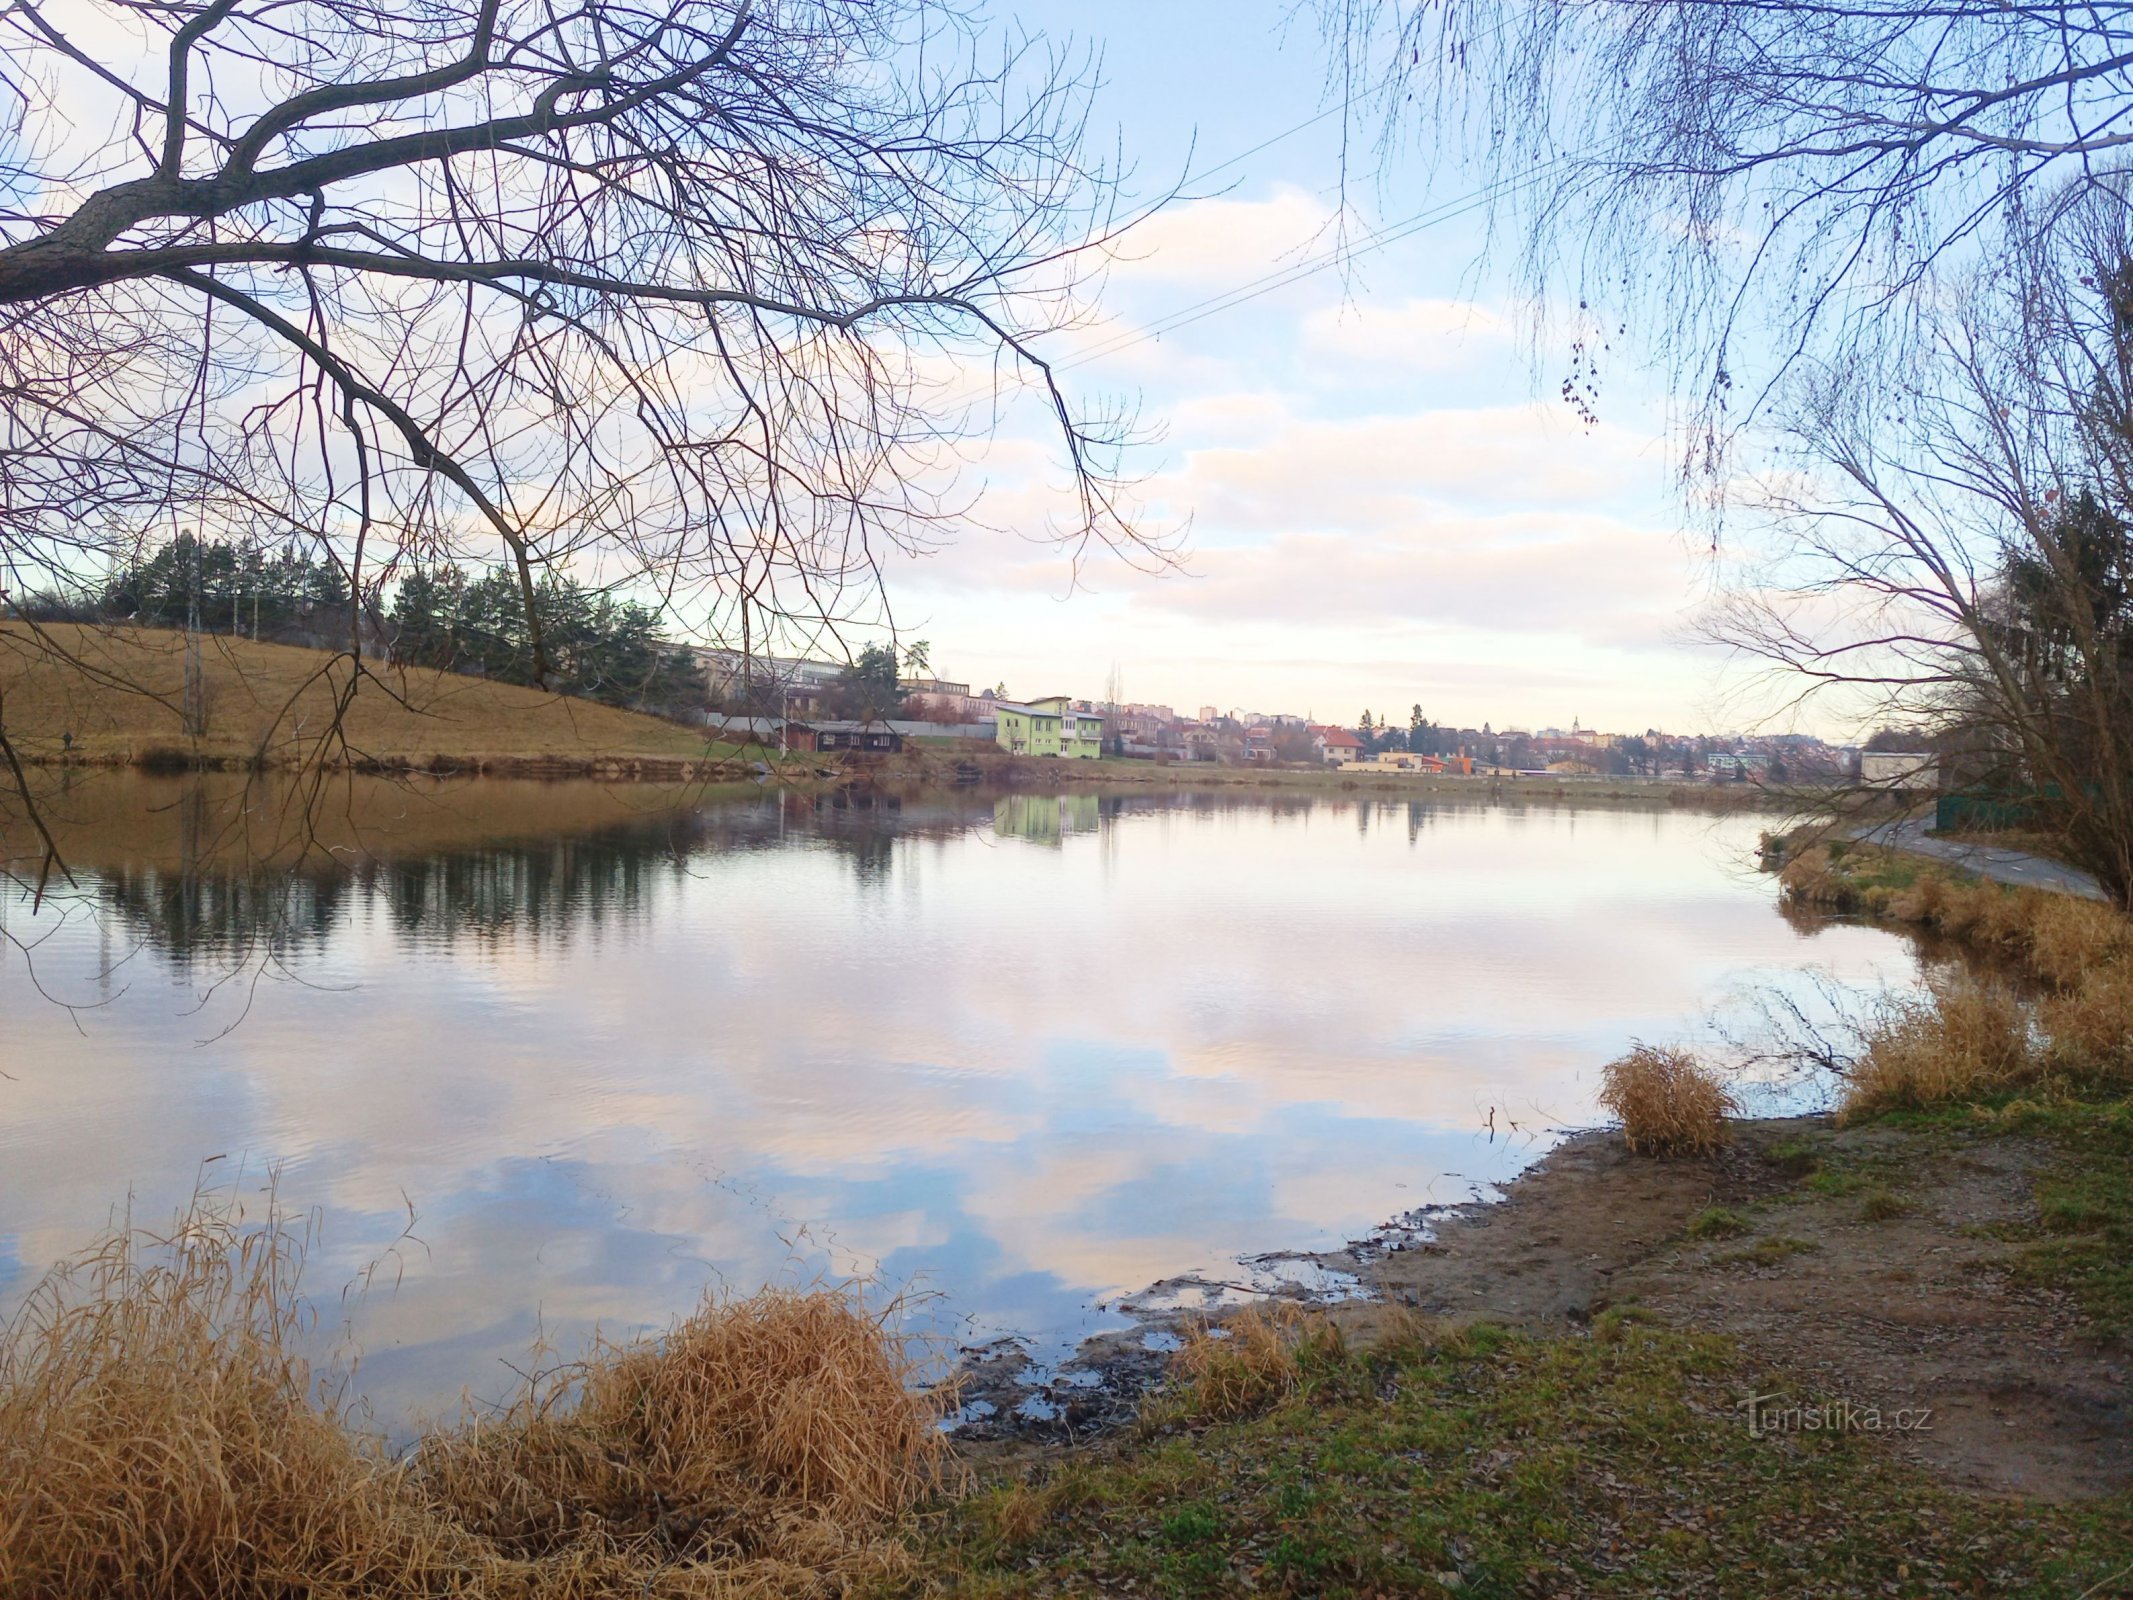 1. View of Sedlčany across the dam